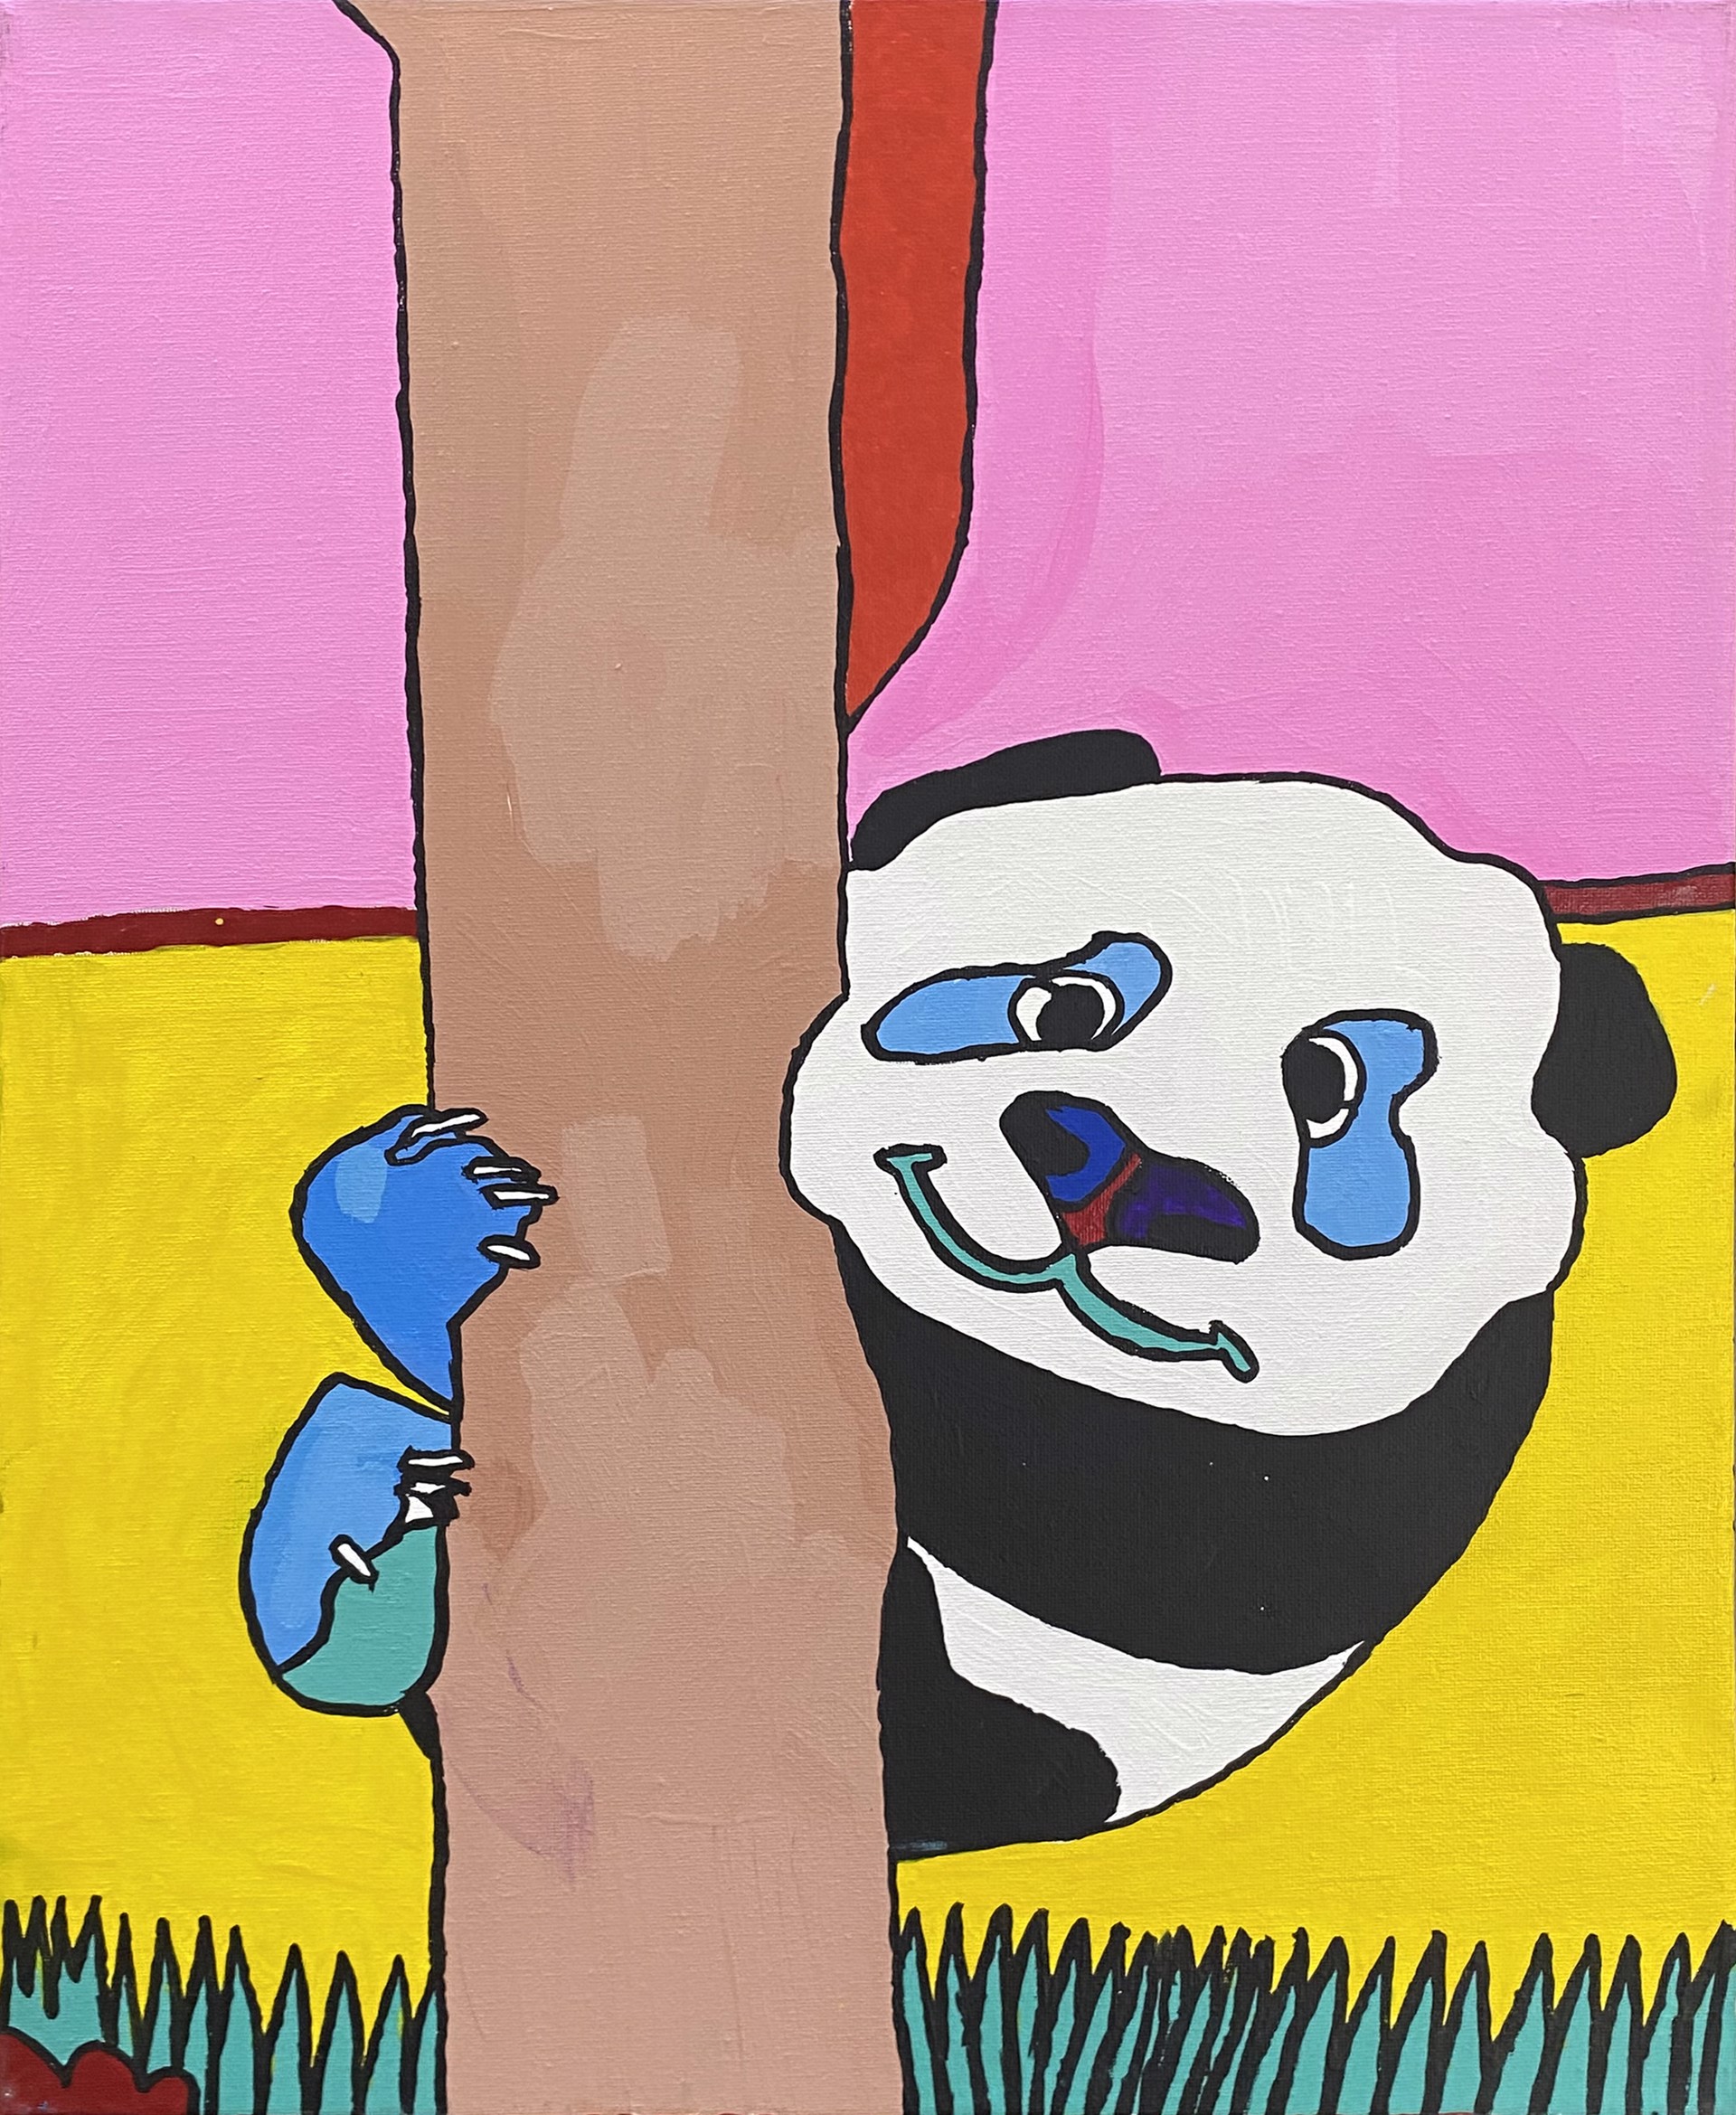 "Panda" by Malcolm E. by One Step Beyond